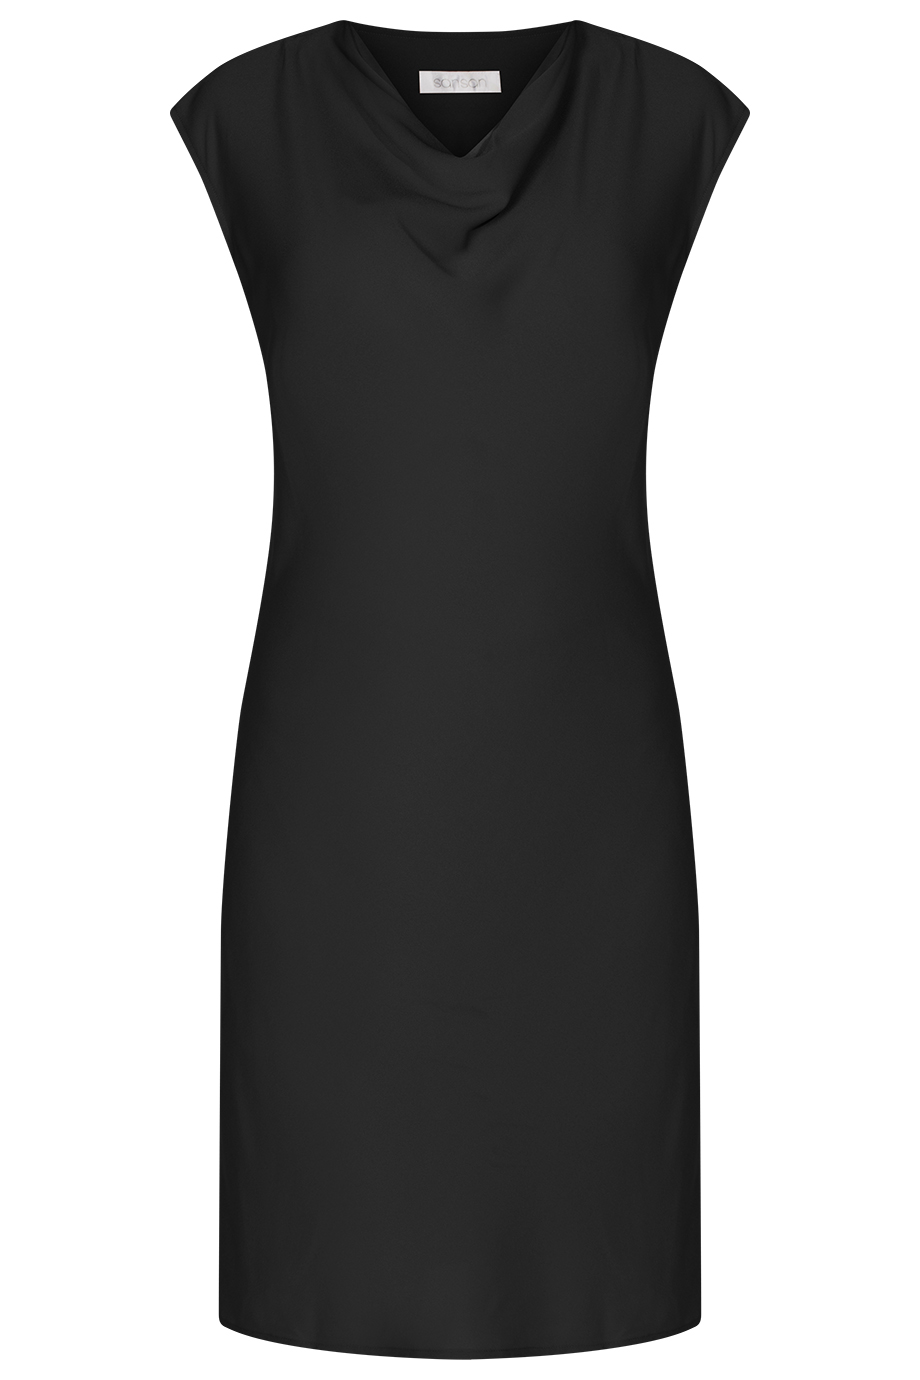 Đầm công sở Isabelle Cowl Neck Dress/ Black